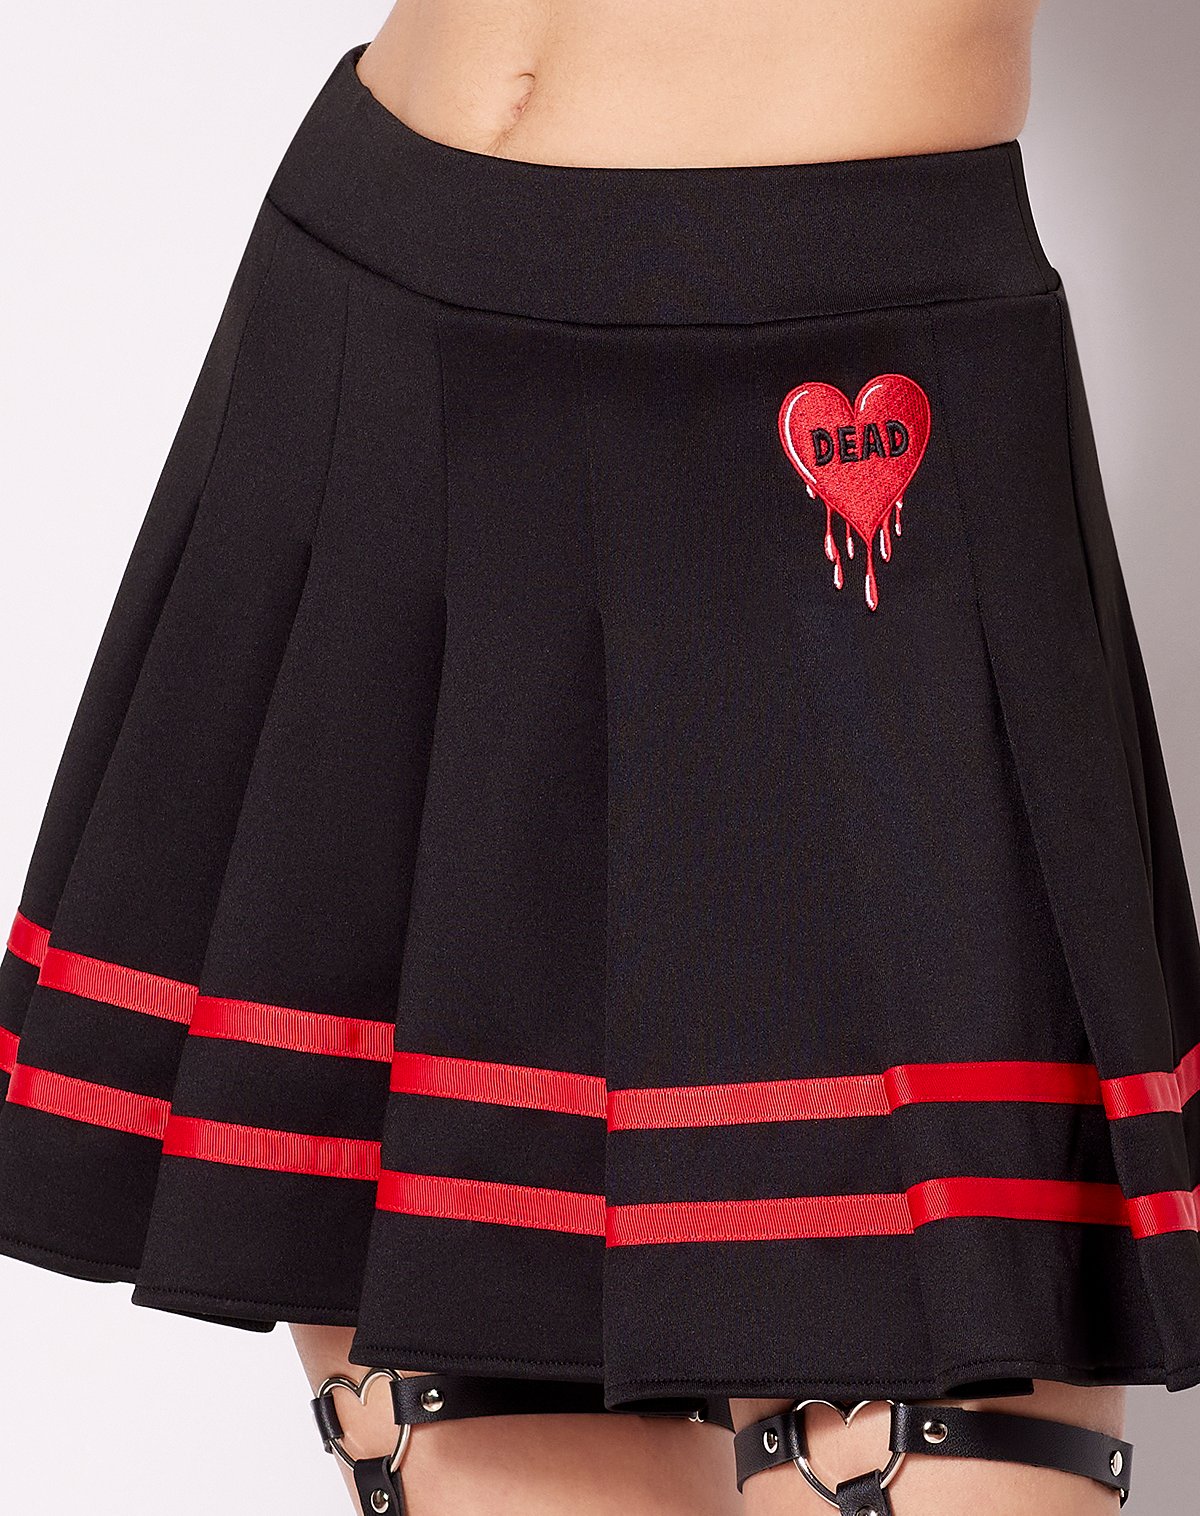 Dead drippy heart skirt